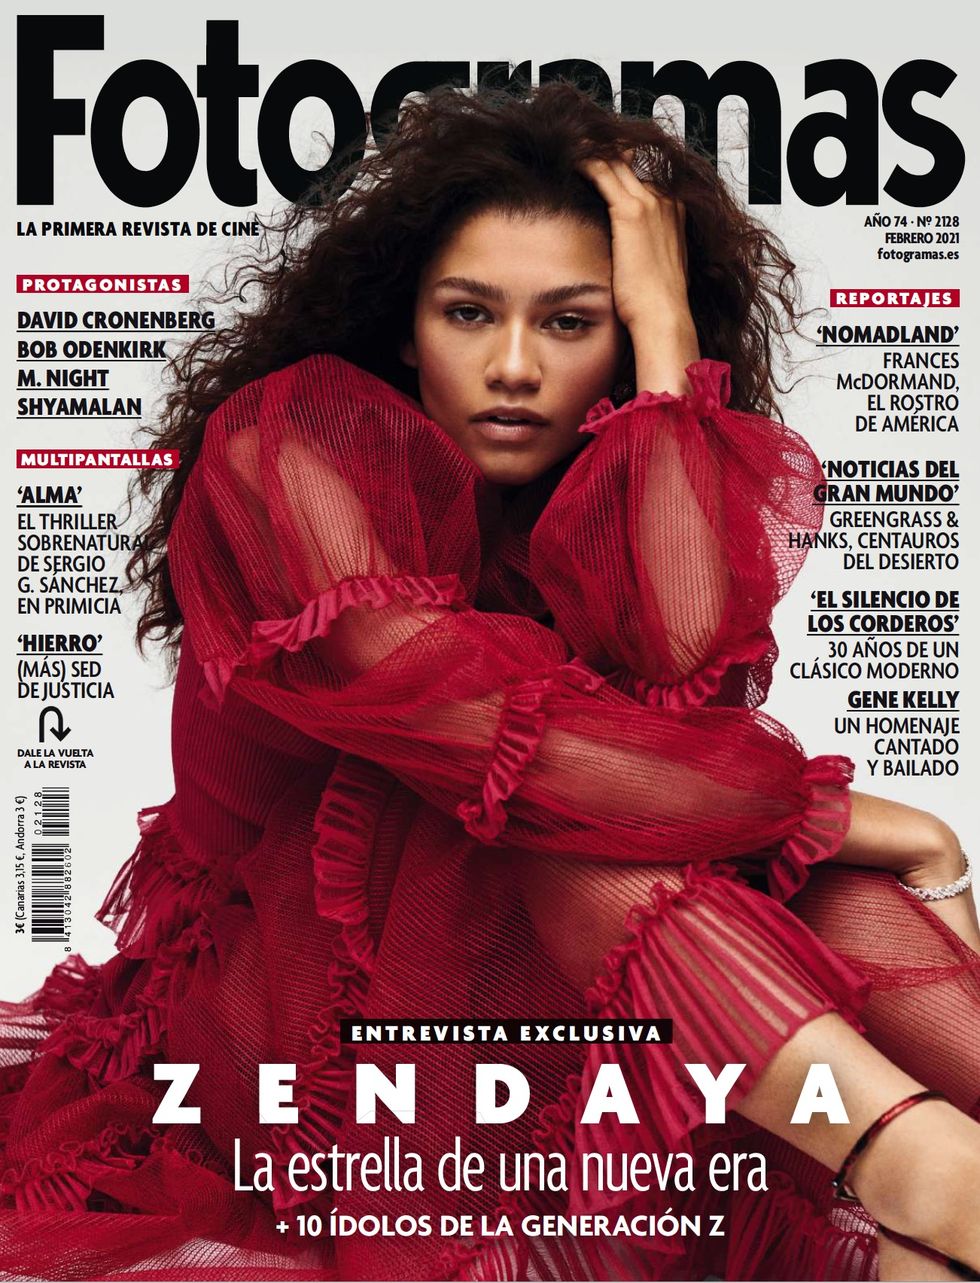 zendaya en la portada de la revista fotogramas de febrero de 2021